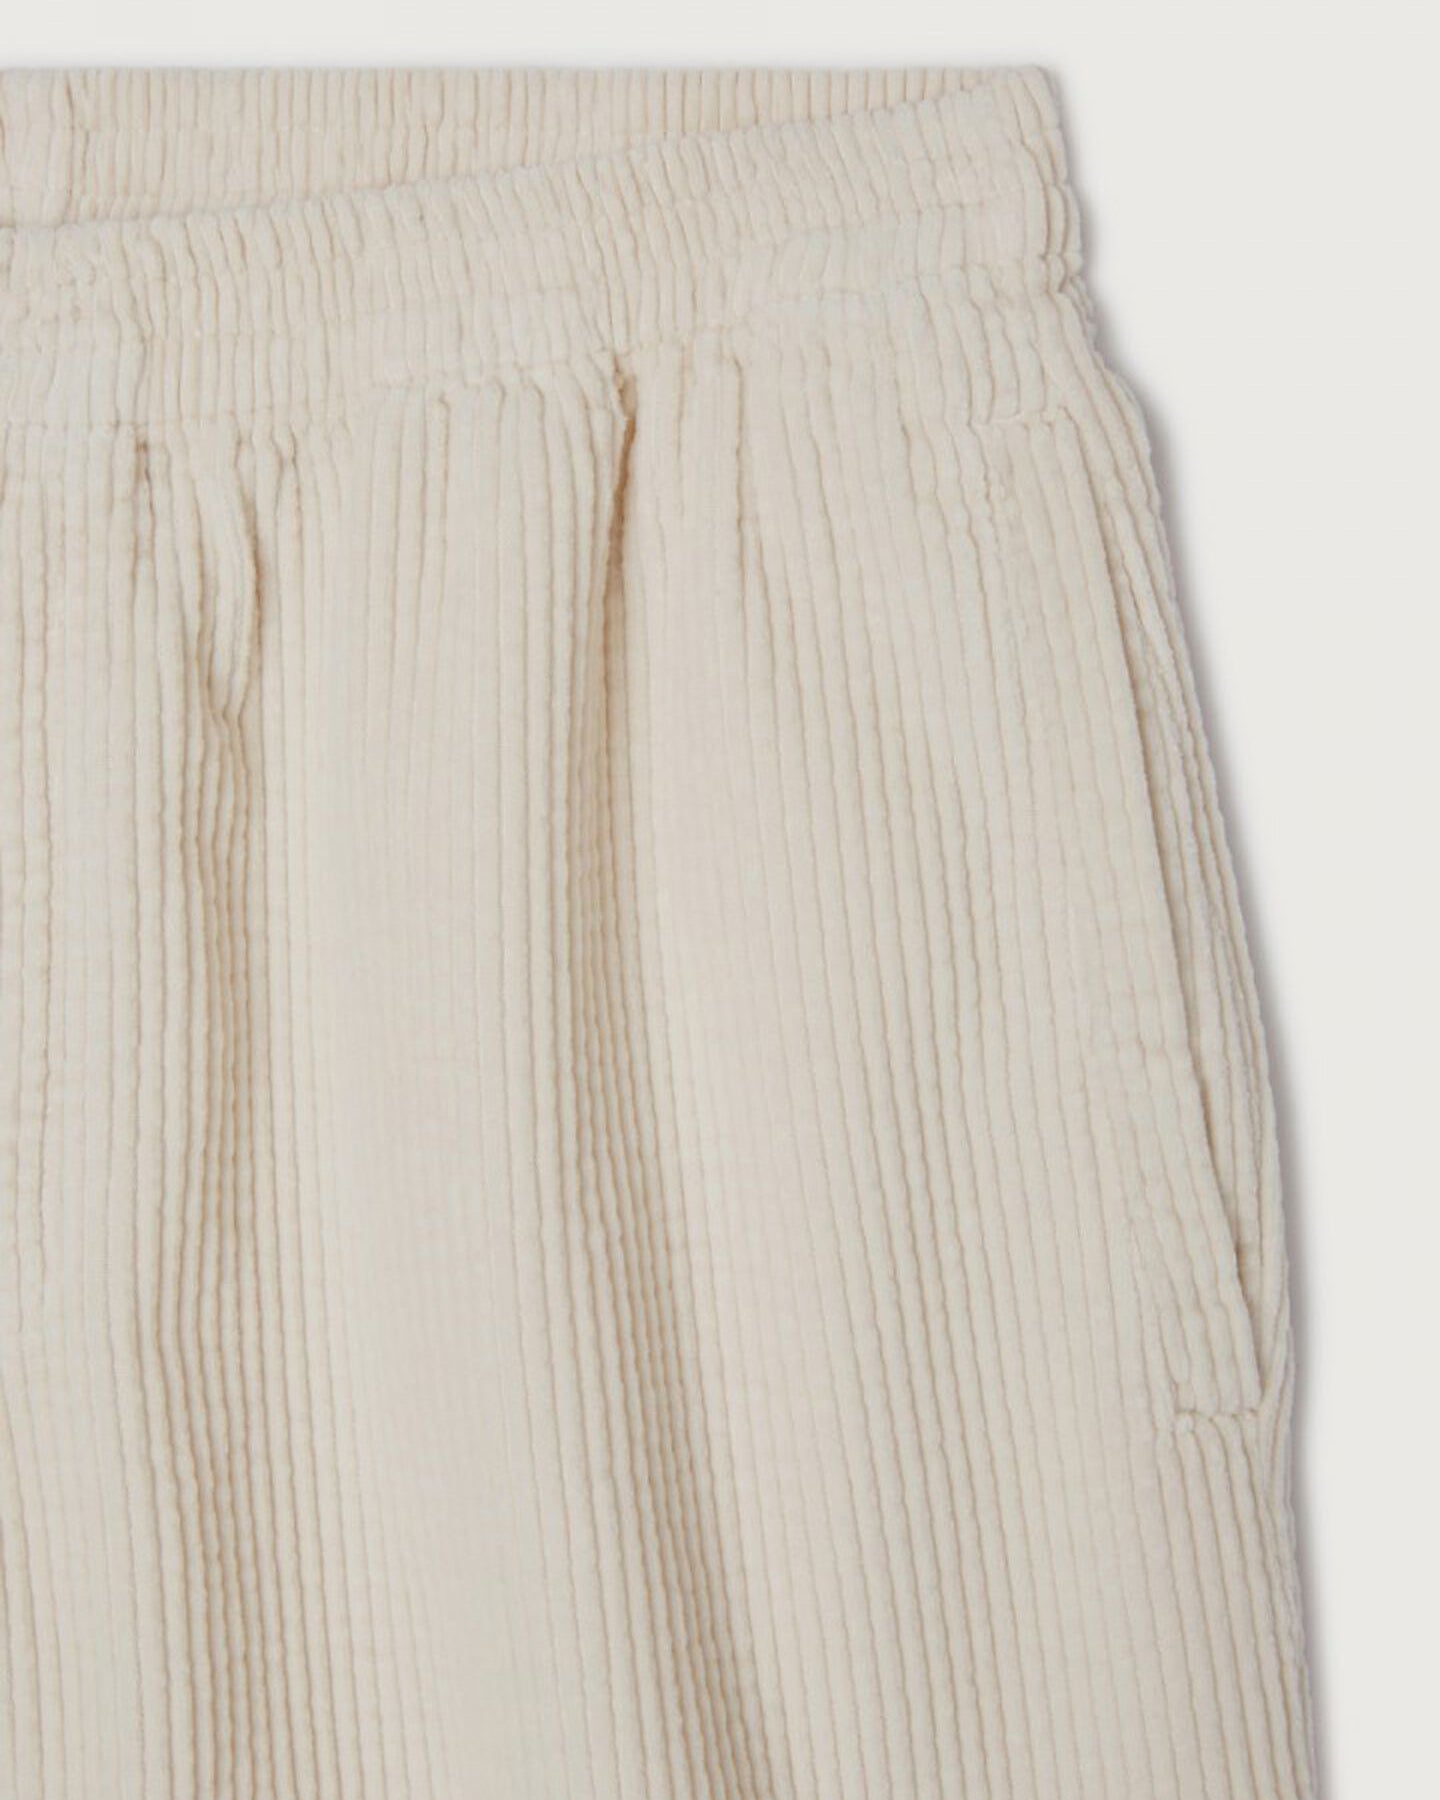 Shorts Padow - Ecru Vintage